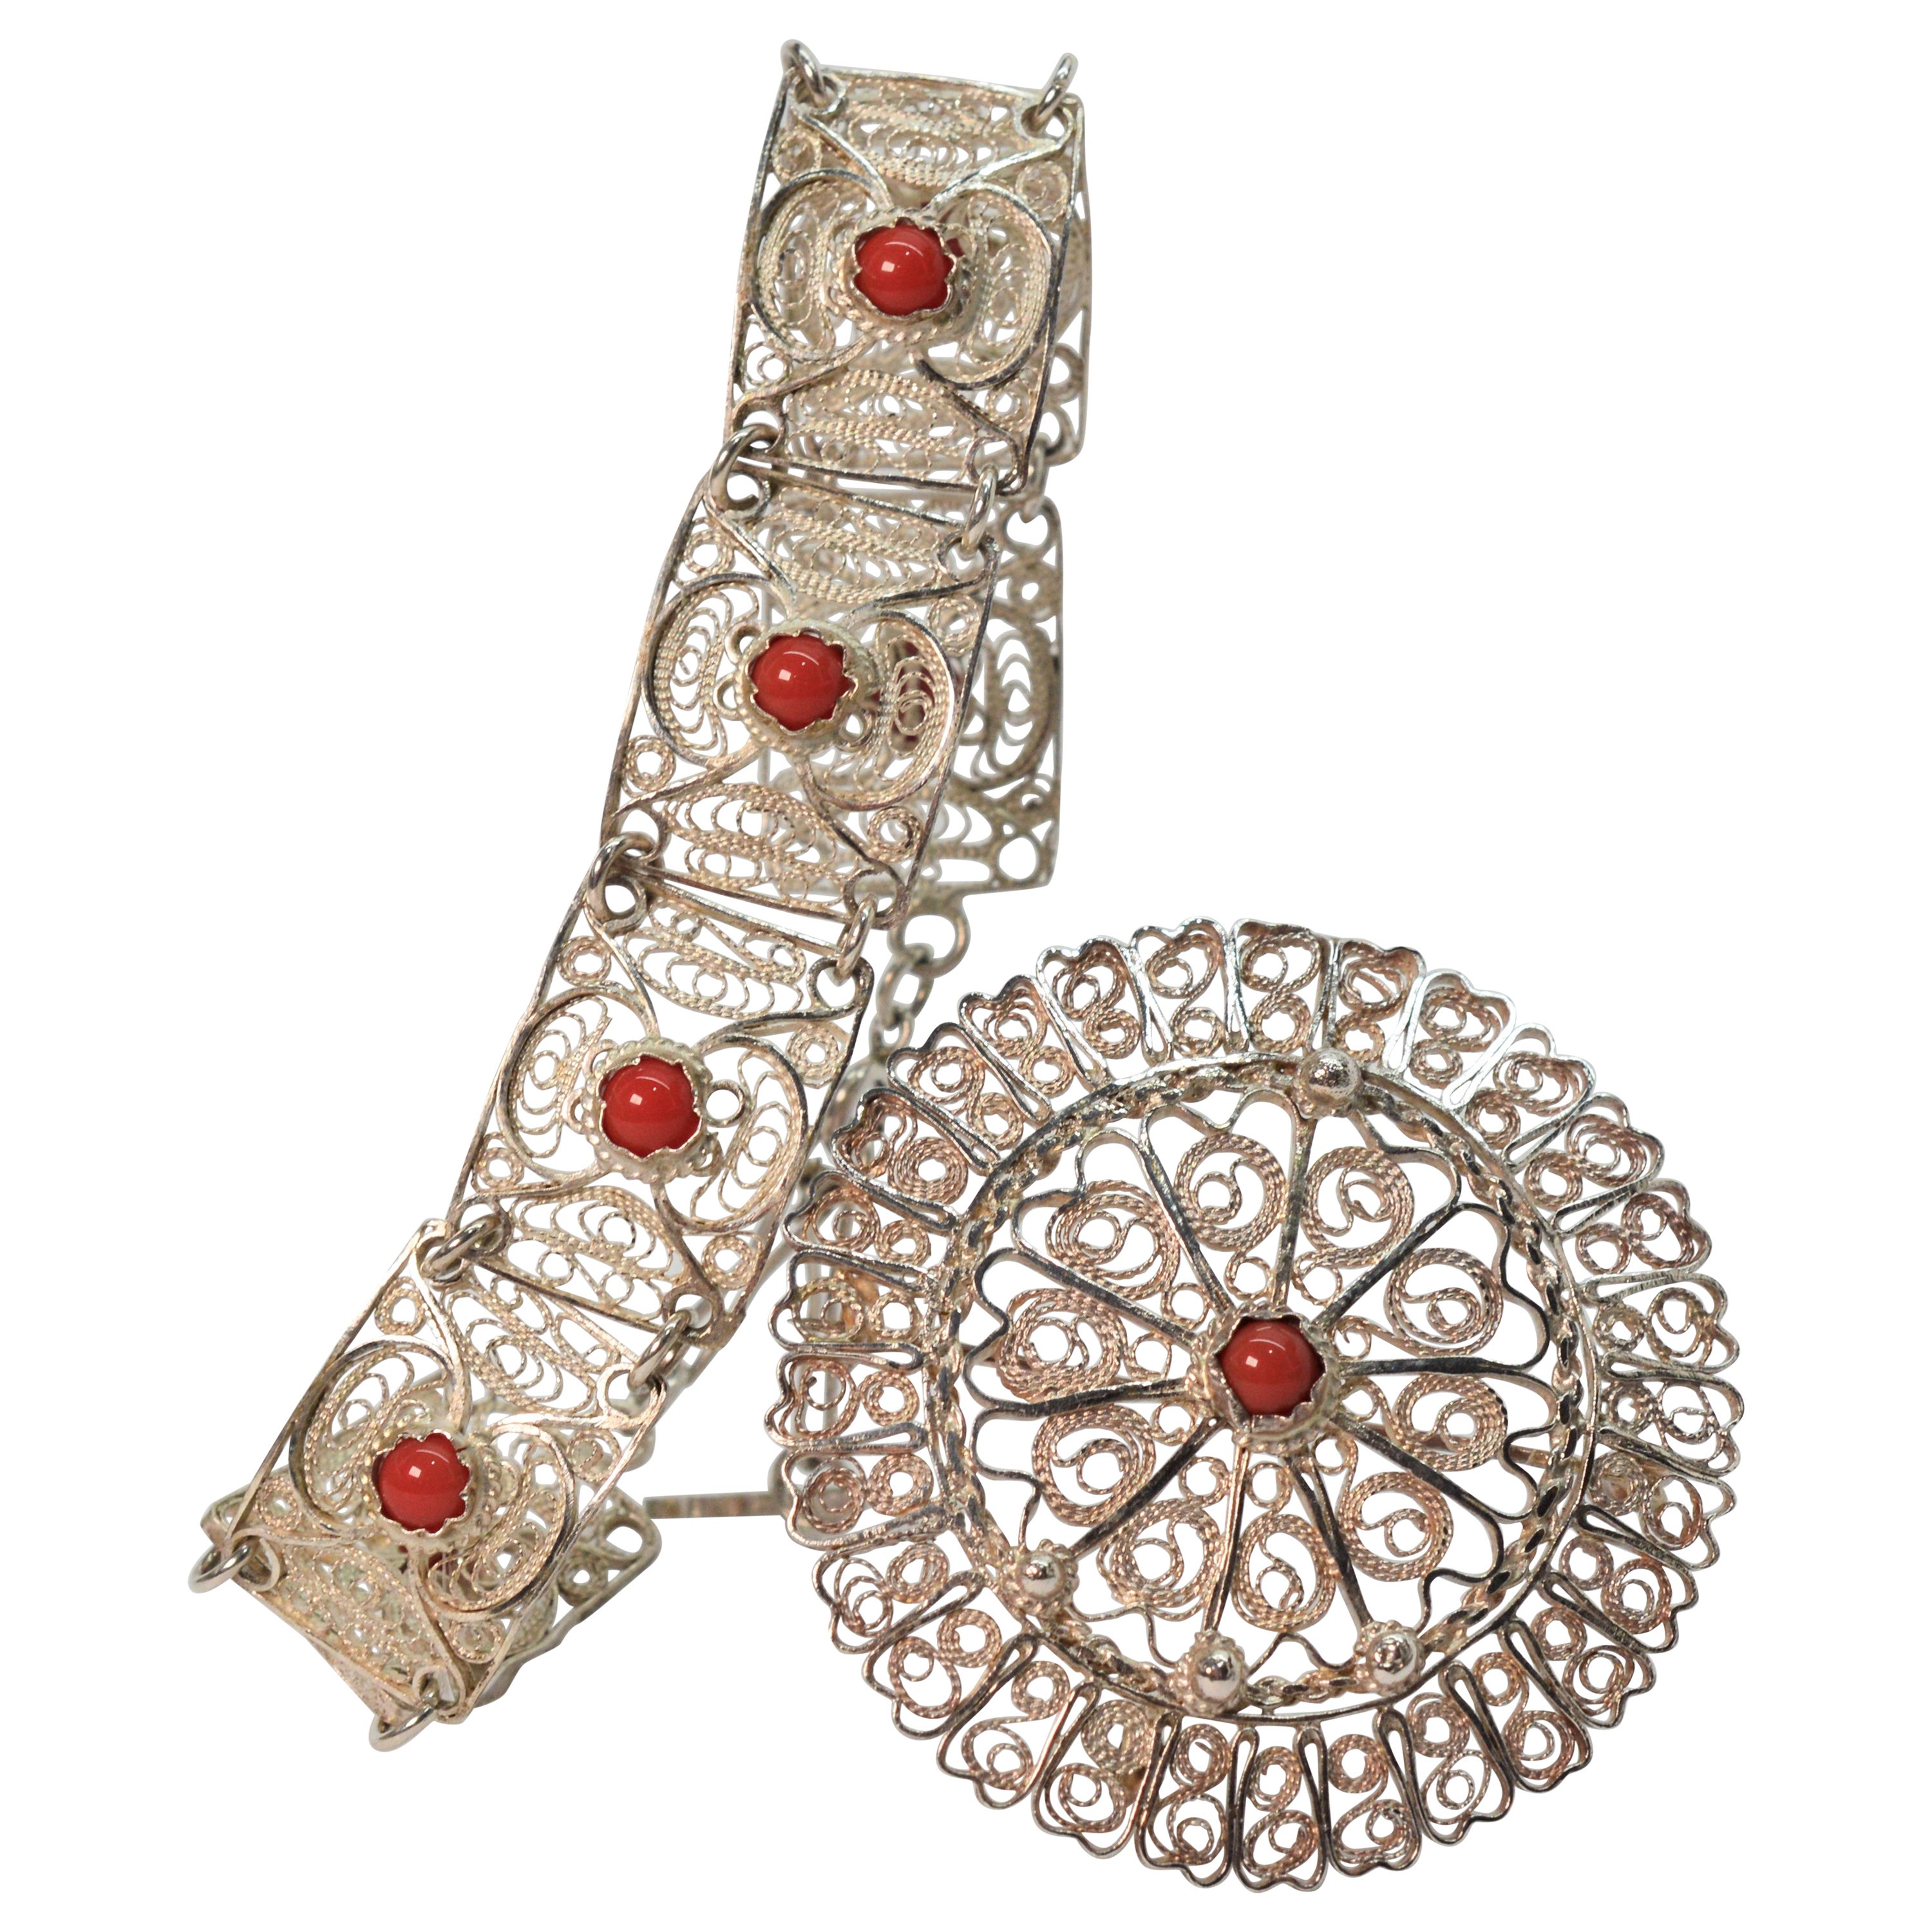 Bracelet artisanal en argent sterling filigrane avec broche pendentif en cornaline